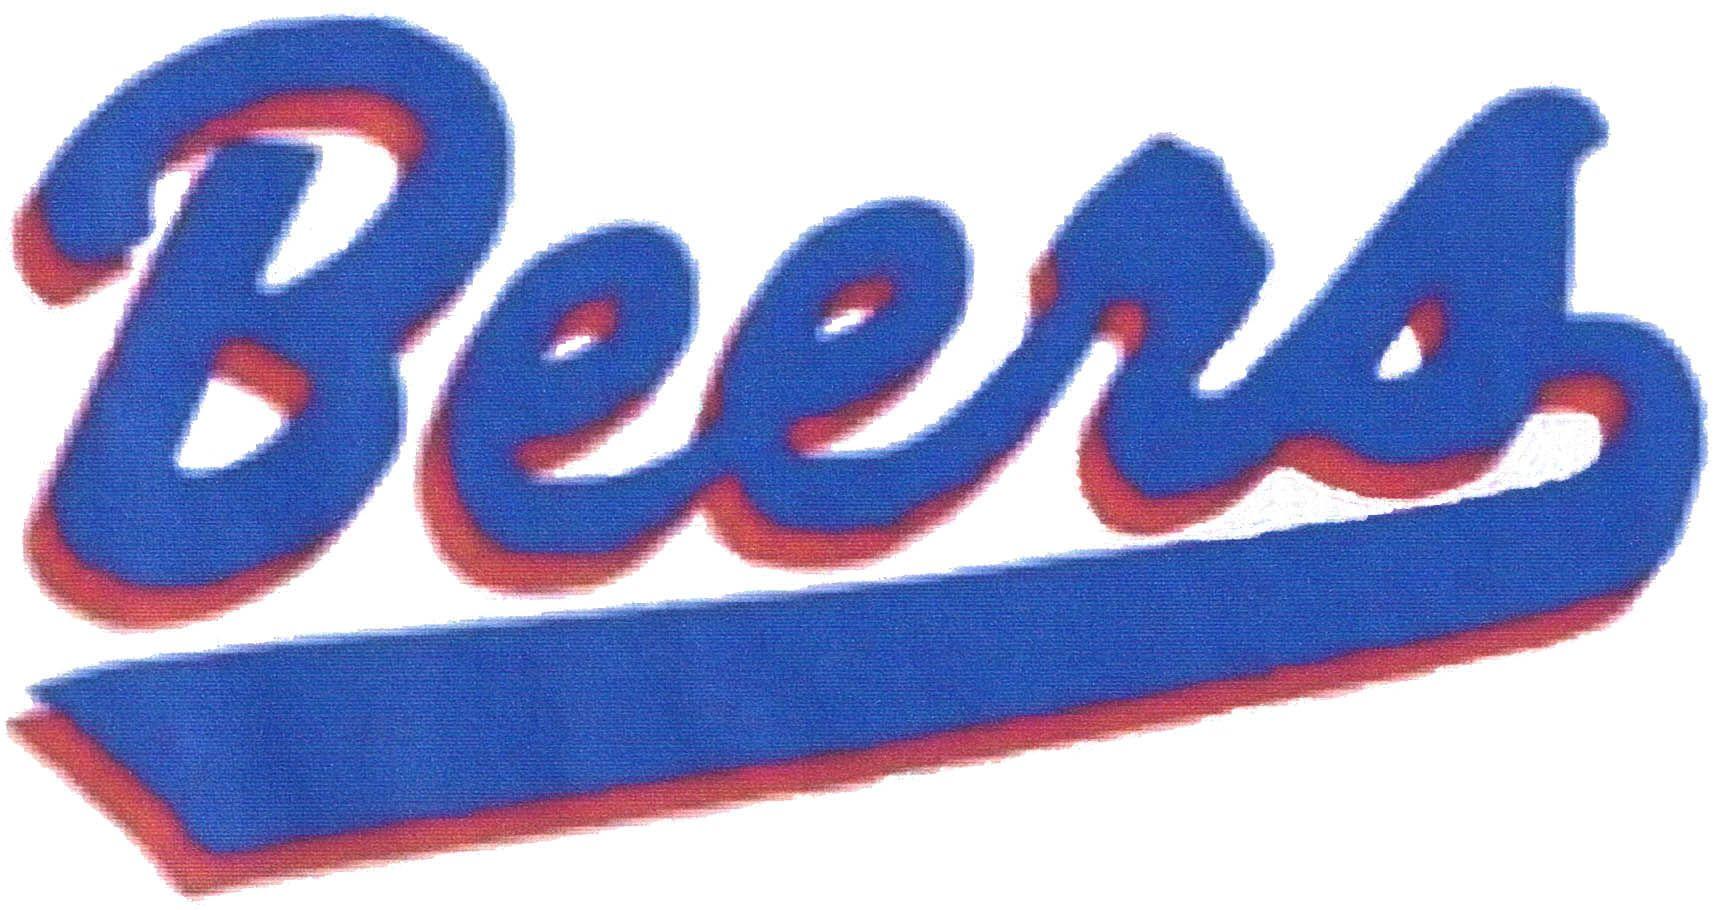 Old English Beer Logo